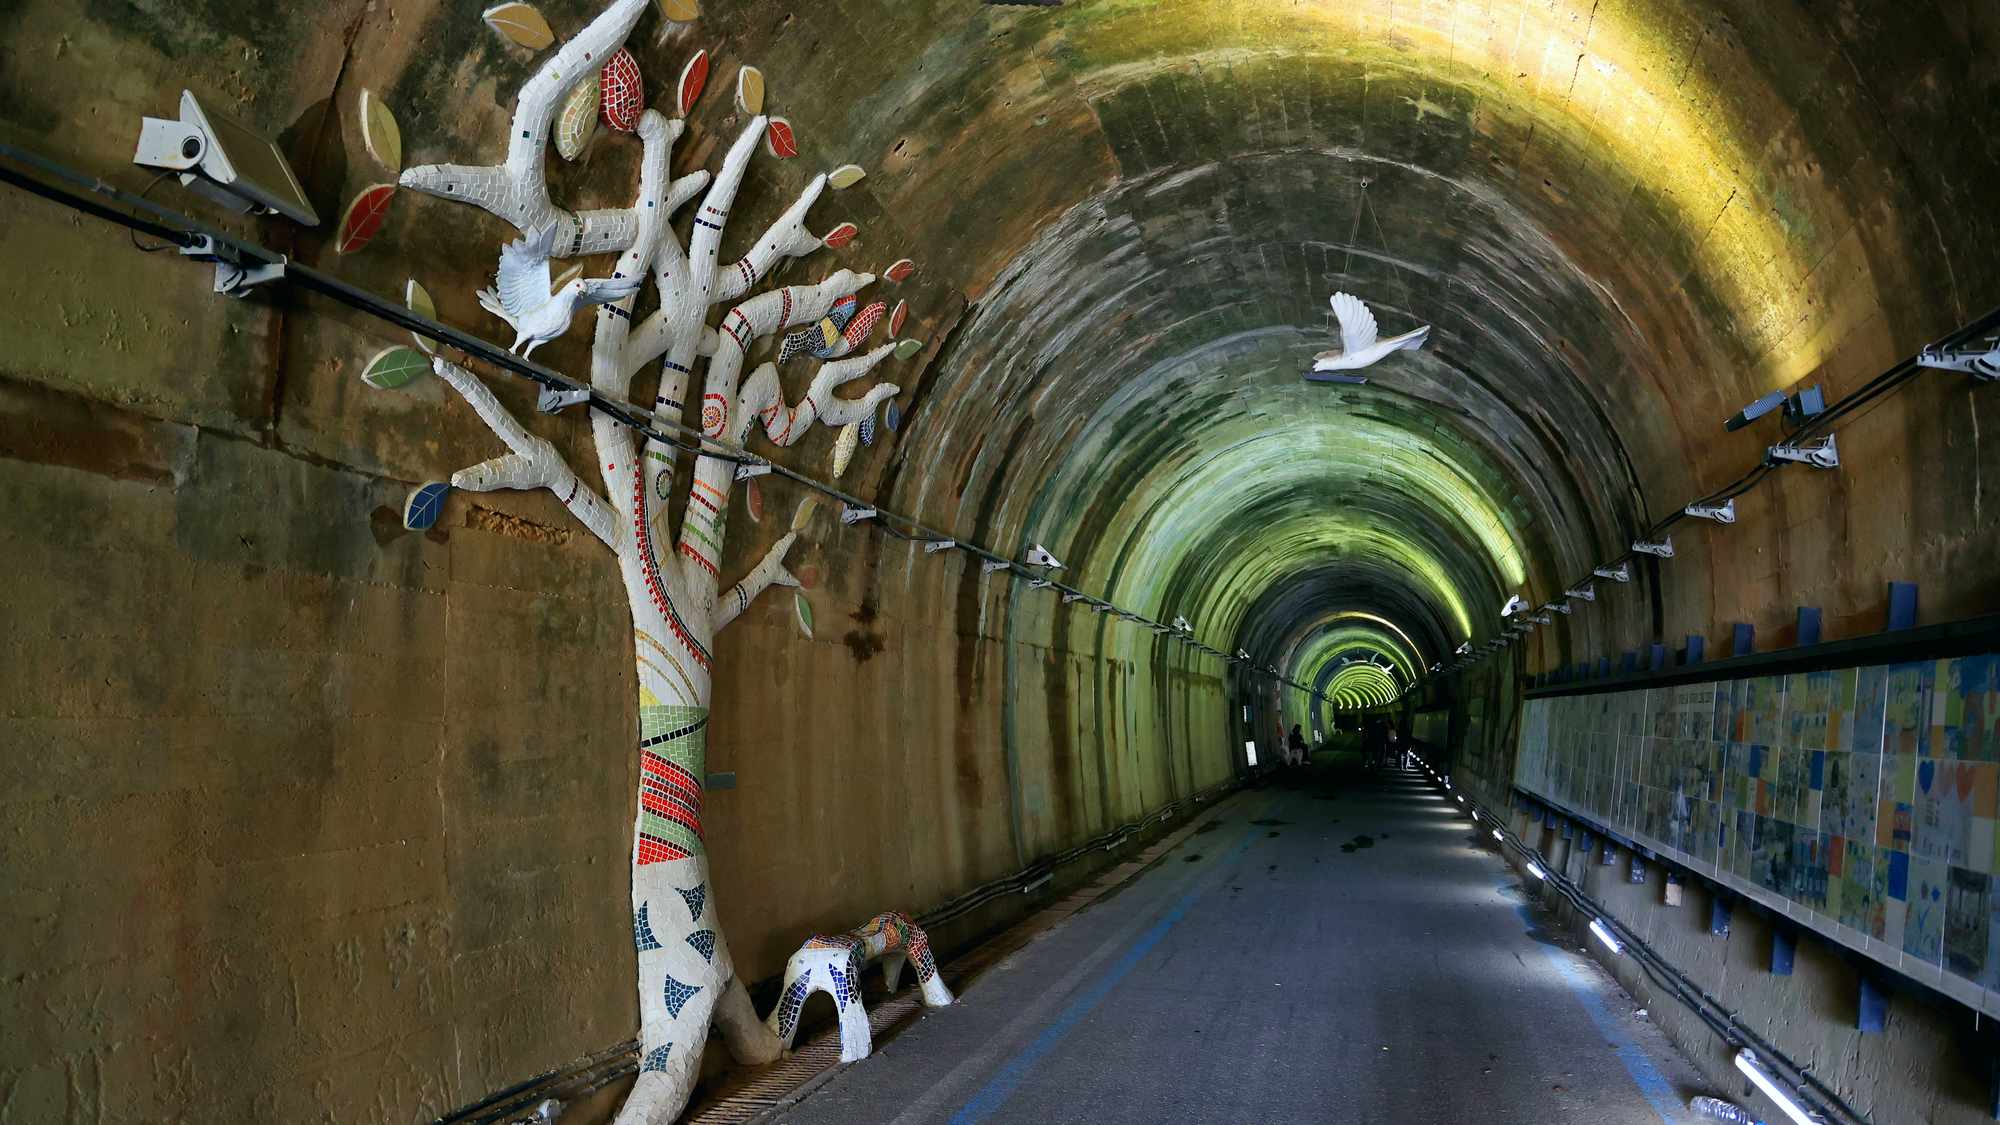 Seomjingang Bike Path - Imsil Gokseong - Hyangga Amusement Park Tunnel Tree Sculpture